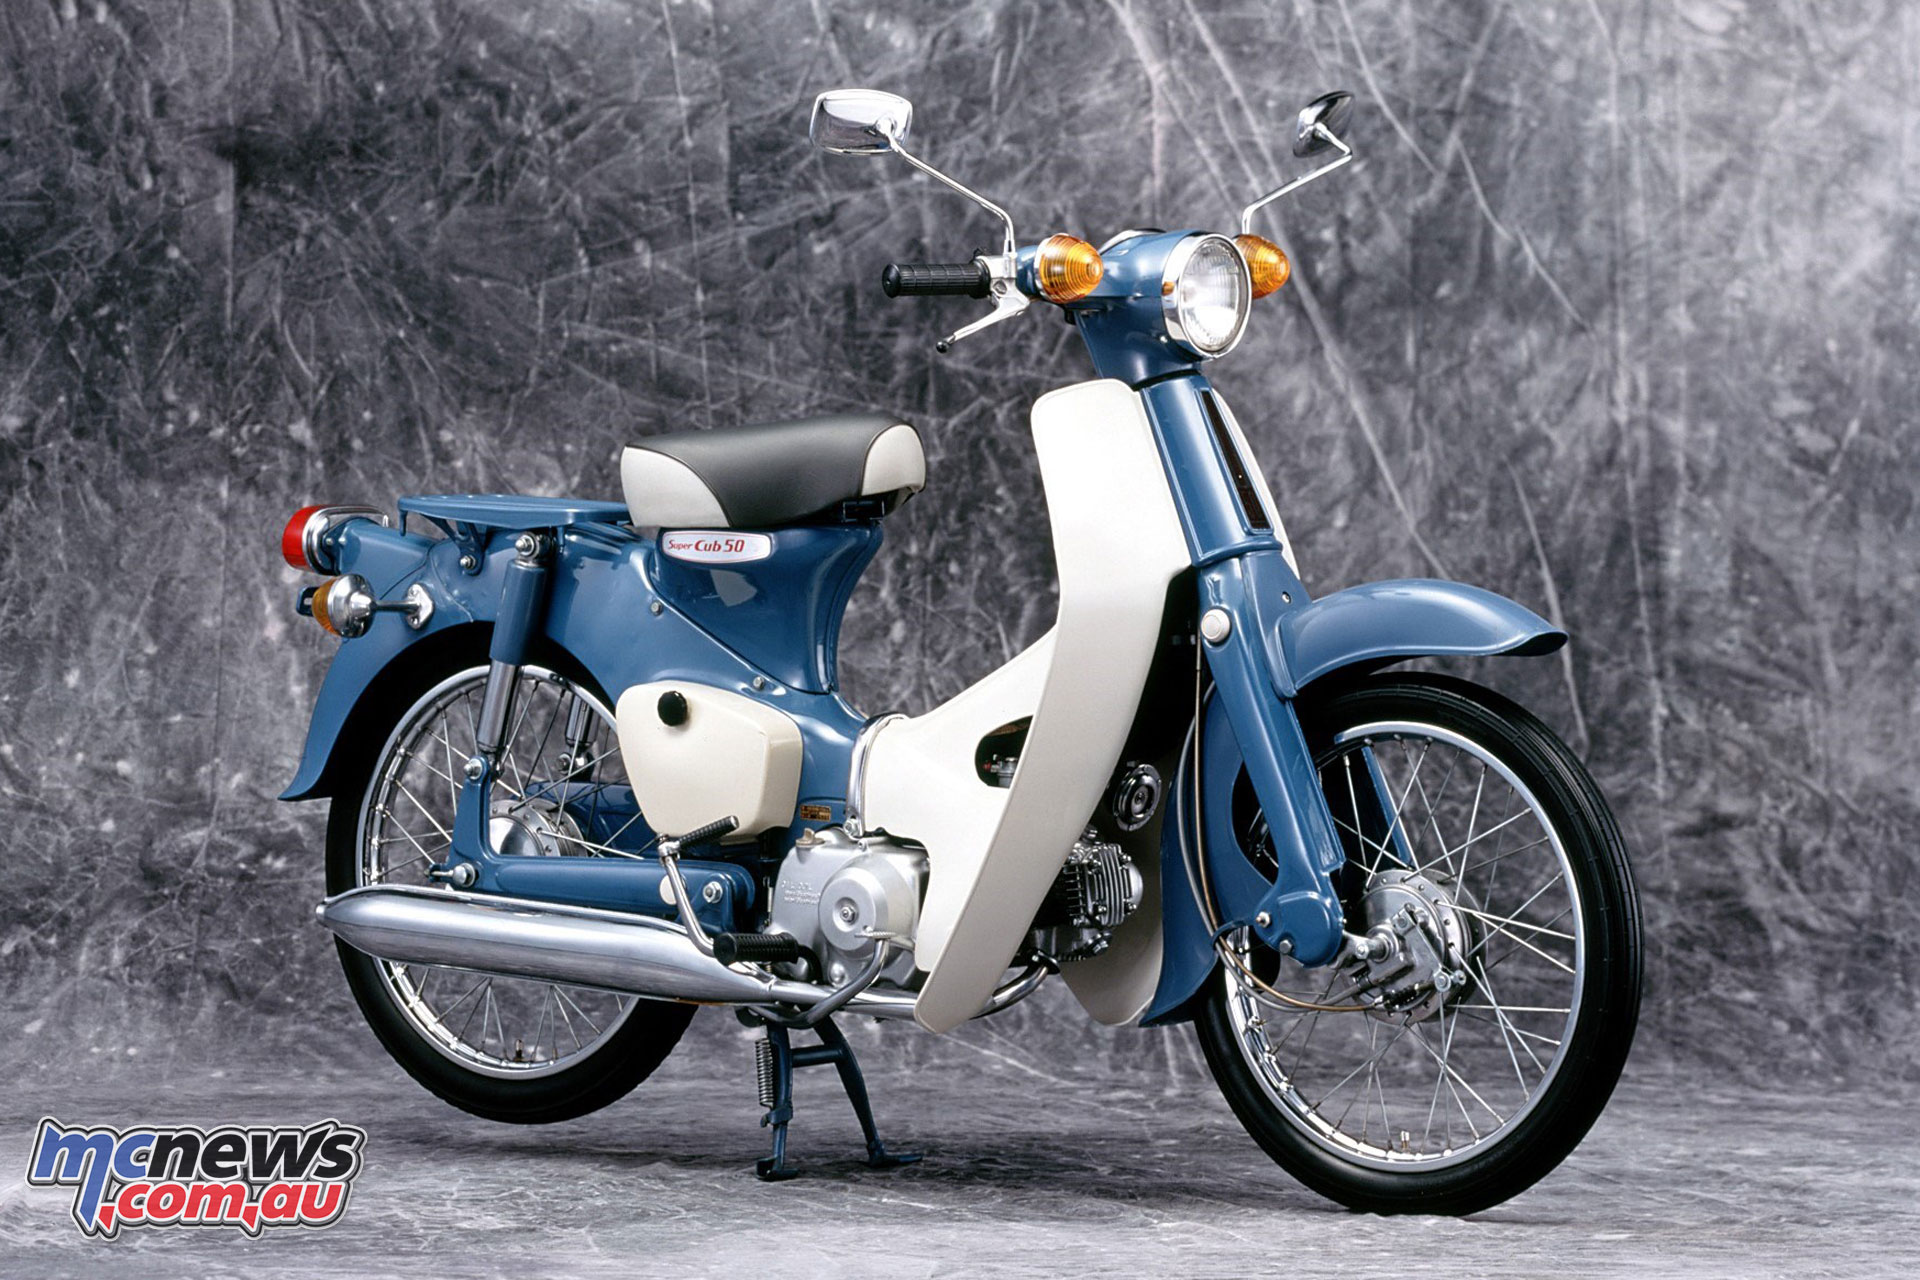 Honda Super Cub 110 Commemorative Edition Concept Motorcycle News Sport And Reviews